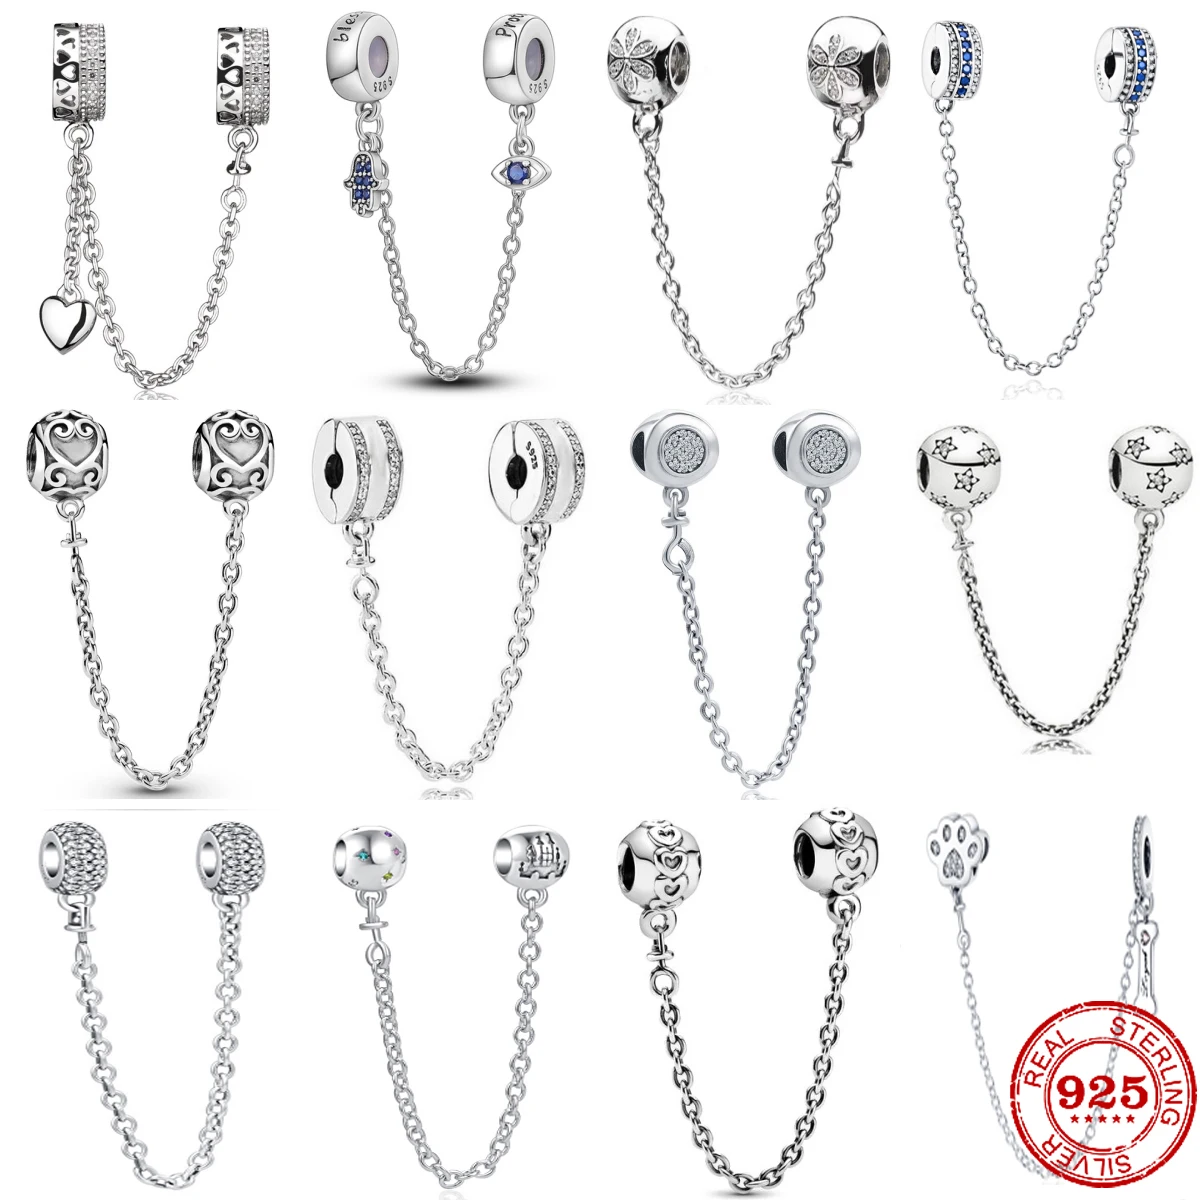 

Silver 925 Sparkling Clear Sparkle Crown Pea Safety Chain Charm Bead Fit Original Pendant Bracelet Pendant DIY Jewelry For Women